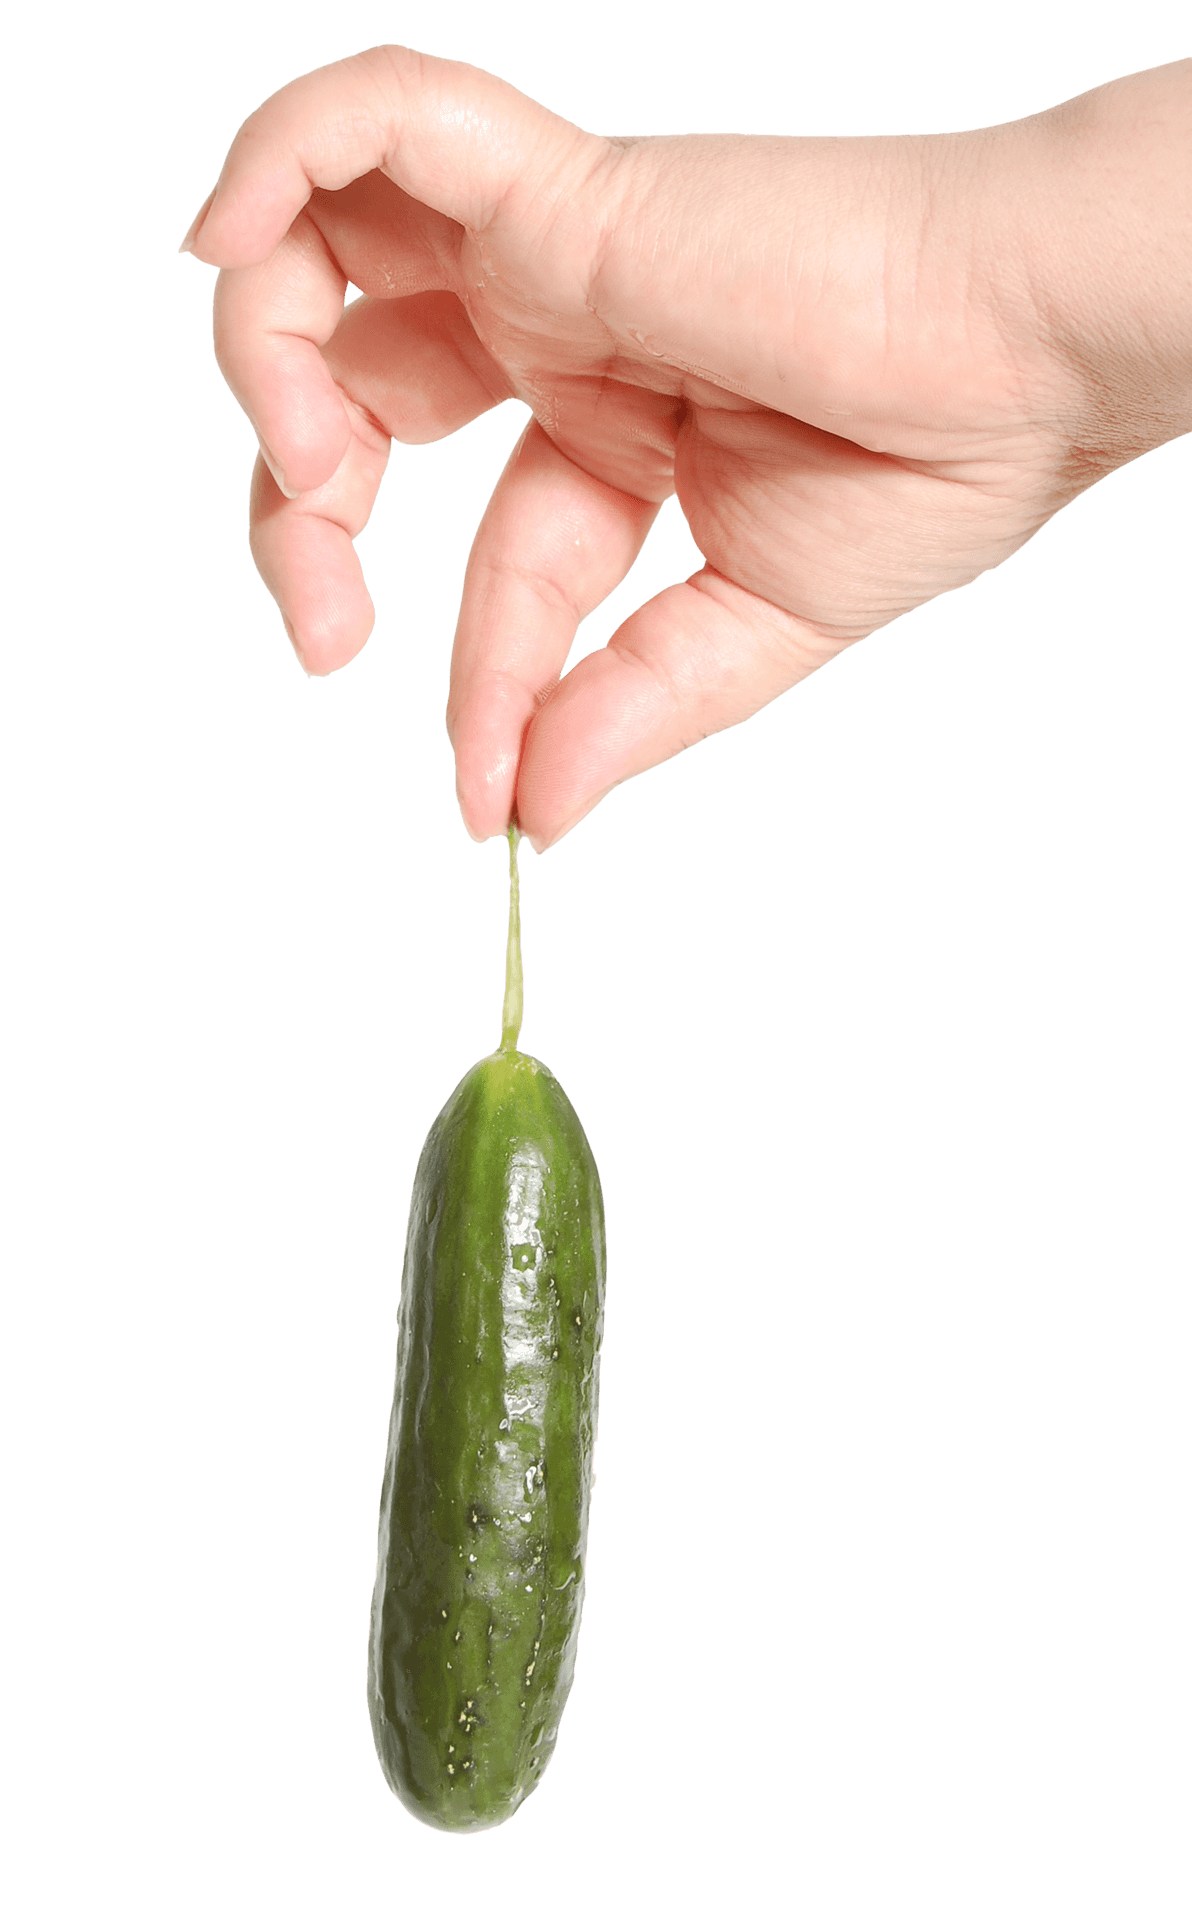 Pickle Dangling From Fingertips.jpg PNG